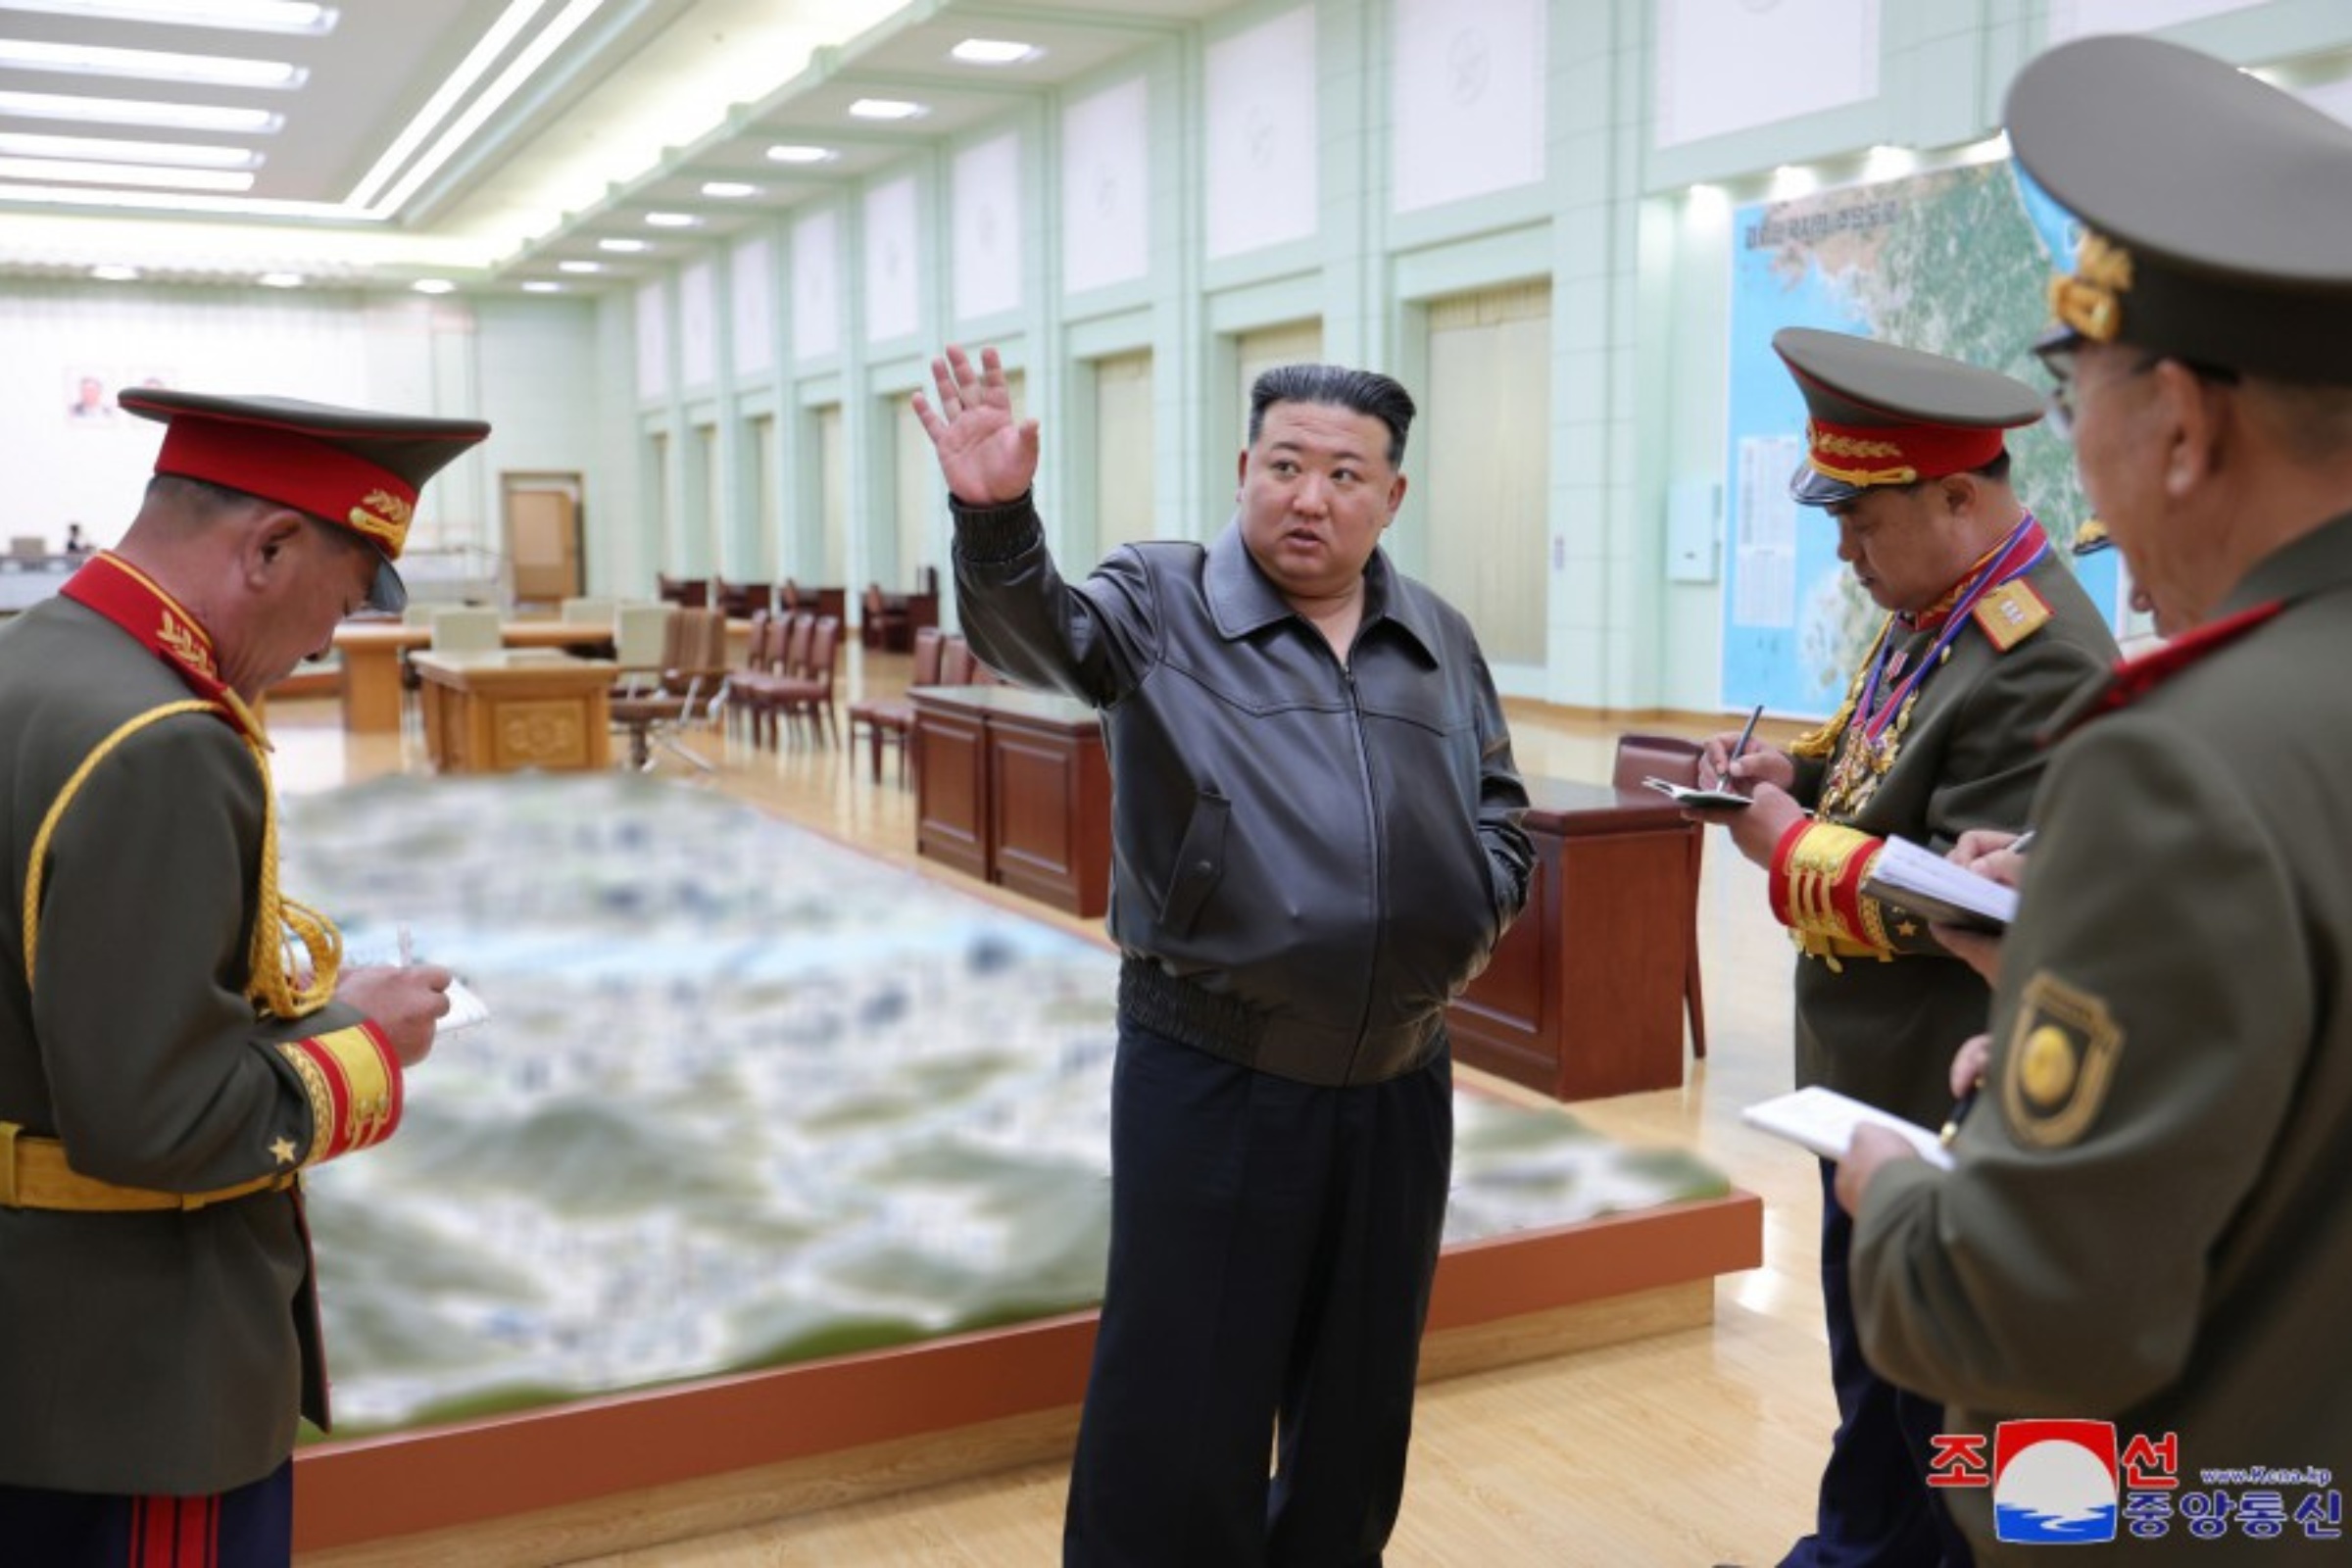 Kim Jong Un threatens North Korea’s enemies with “death blow”